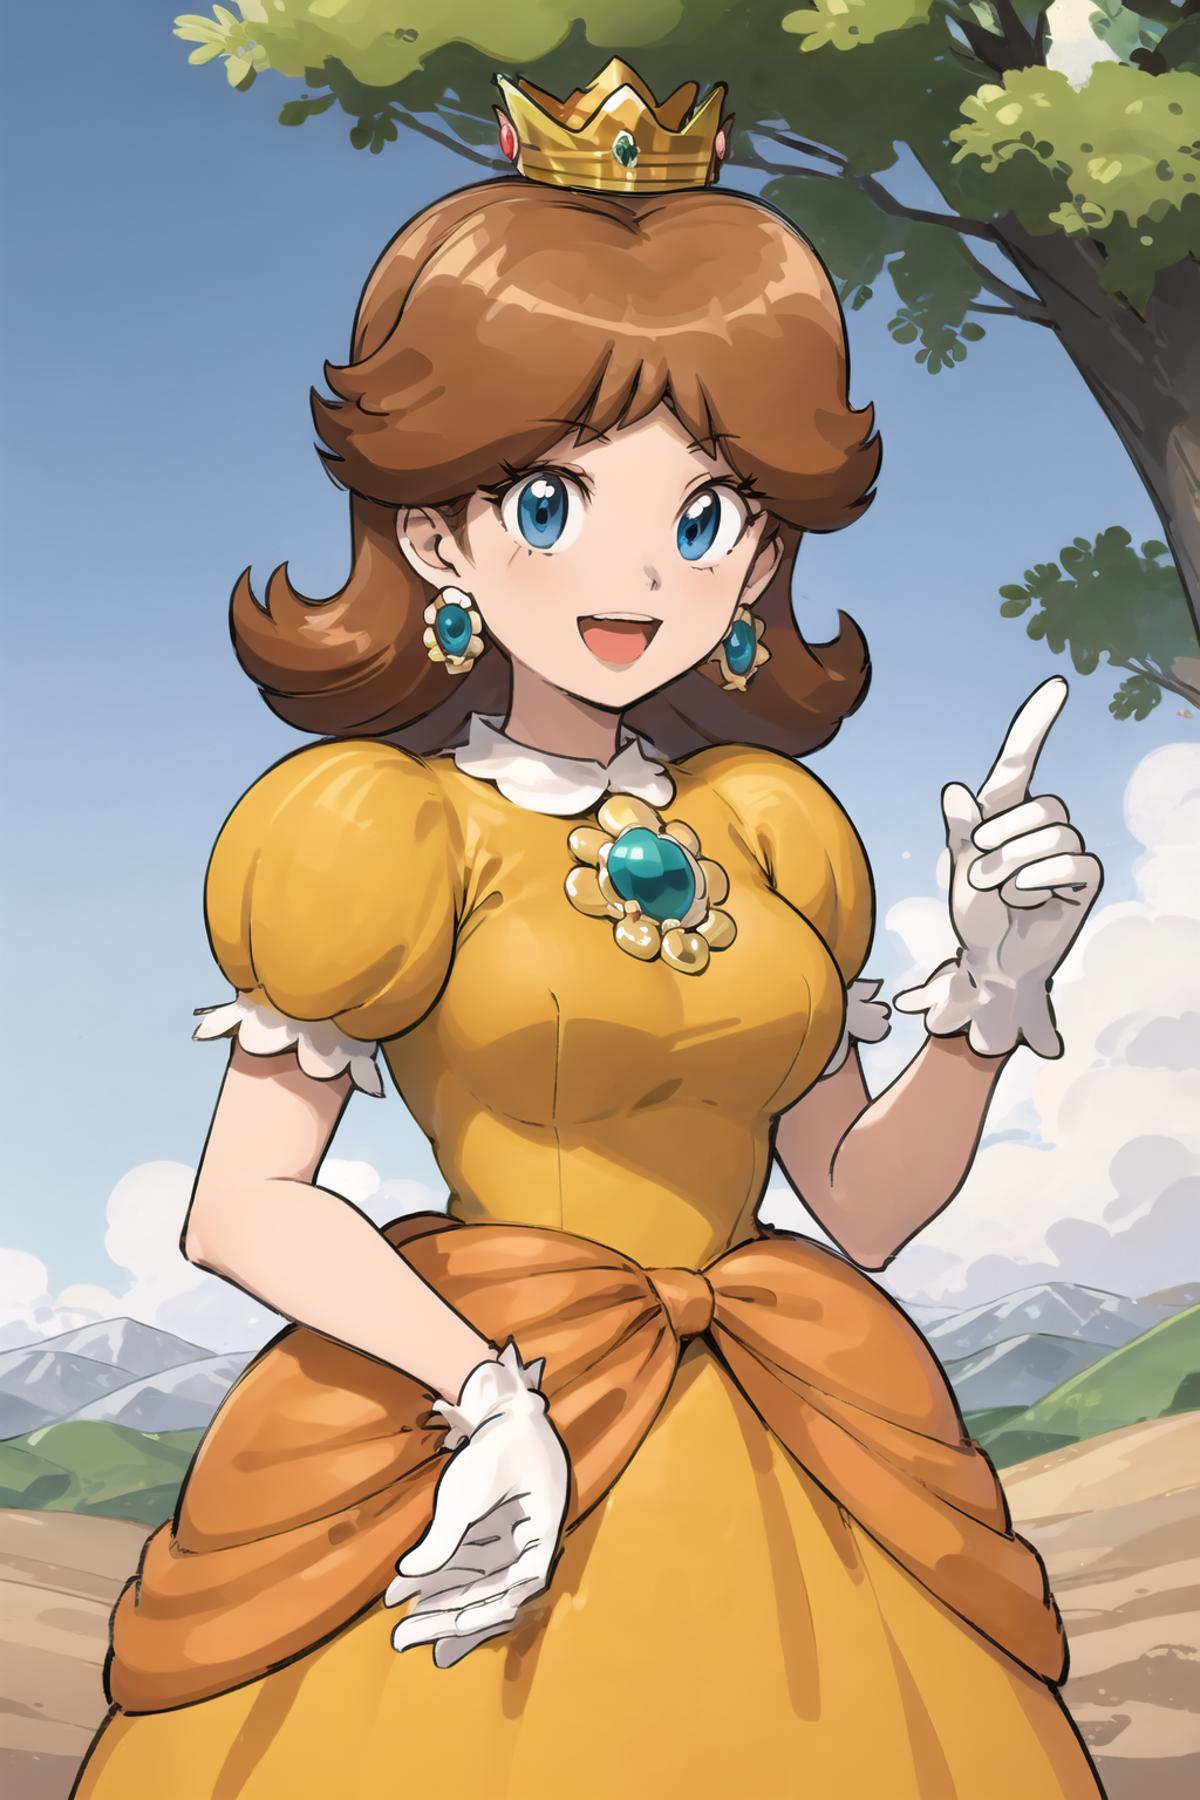 Mario - Princess Daisy image by Idkanymore50